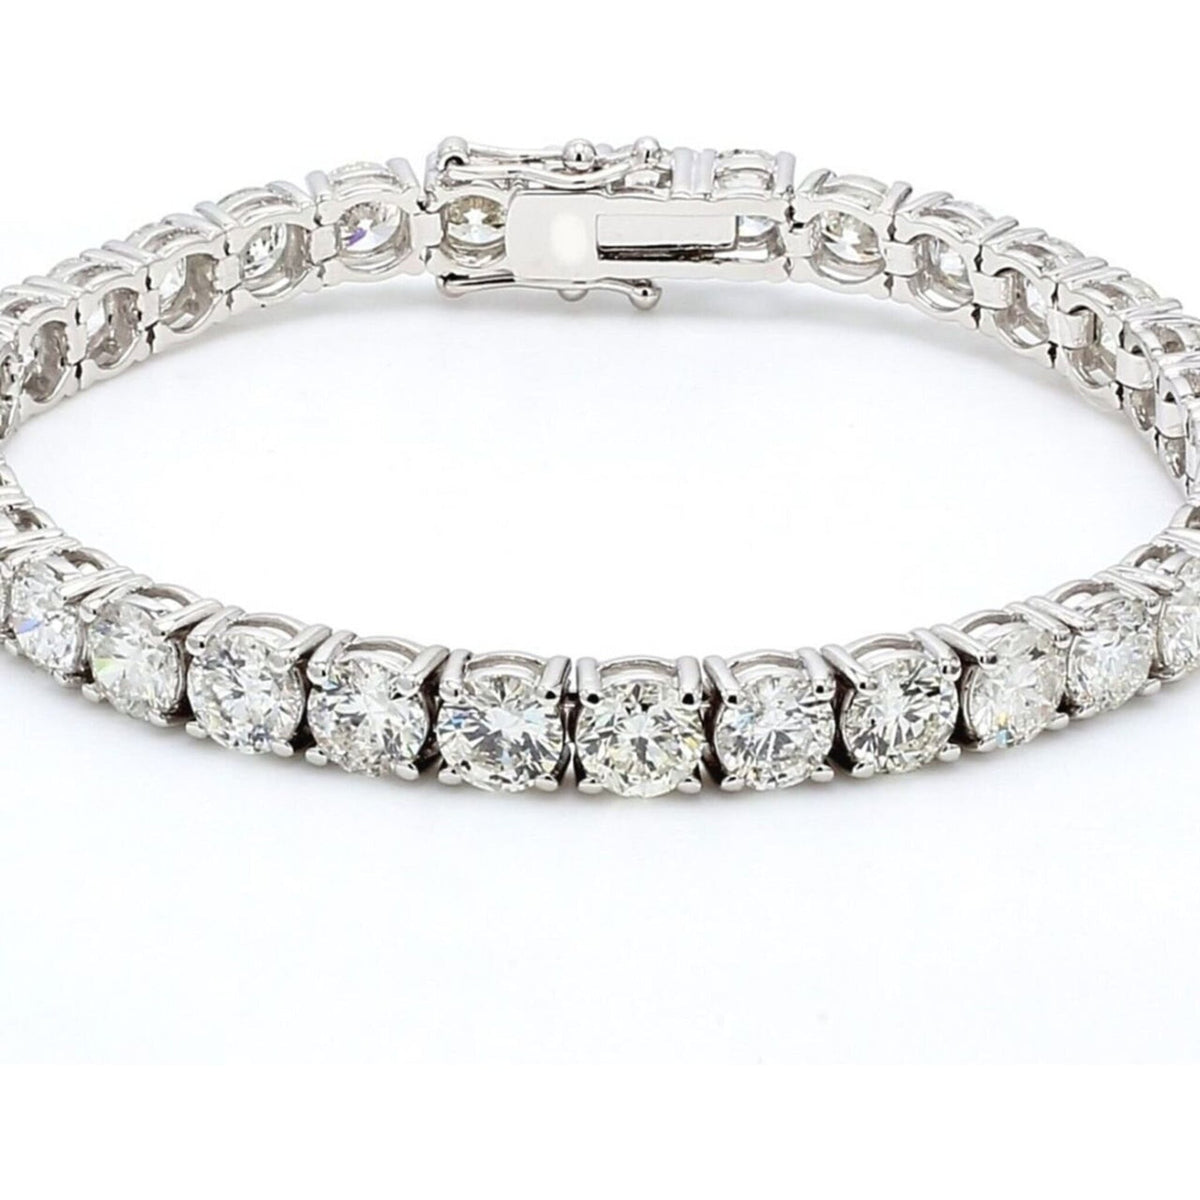 Elegant 18k White Gold Tennis Bracelet with Diamonds